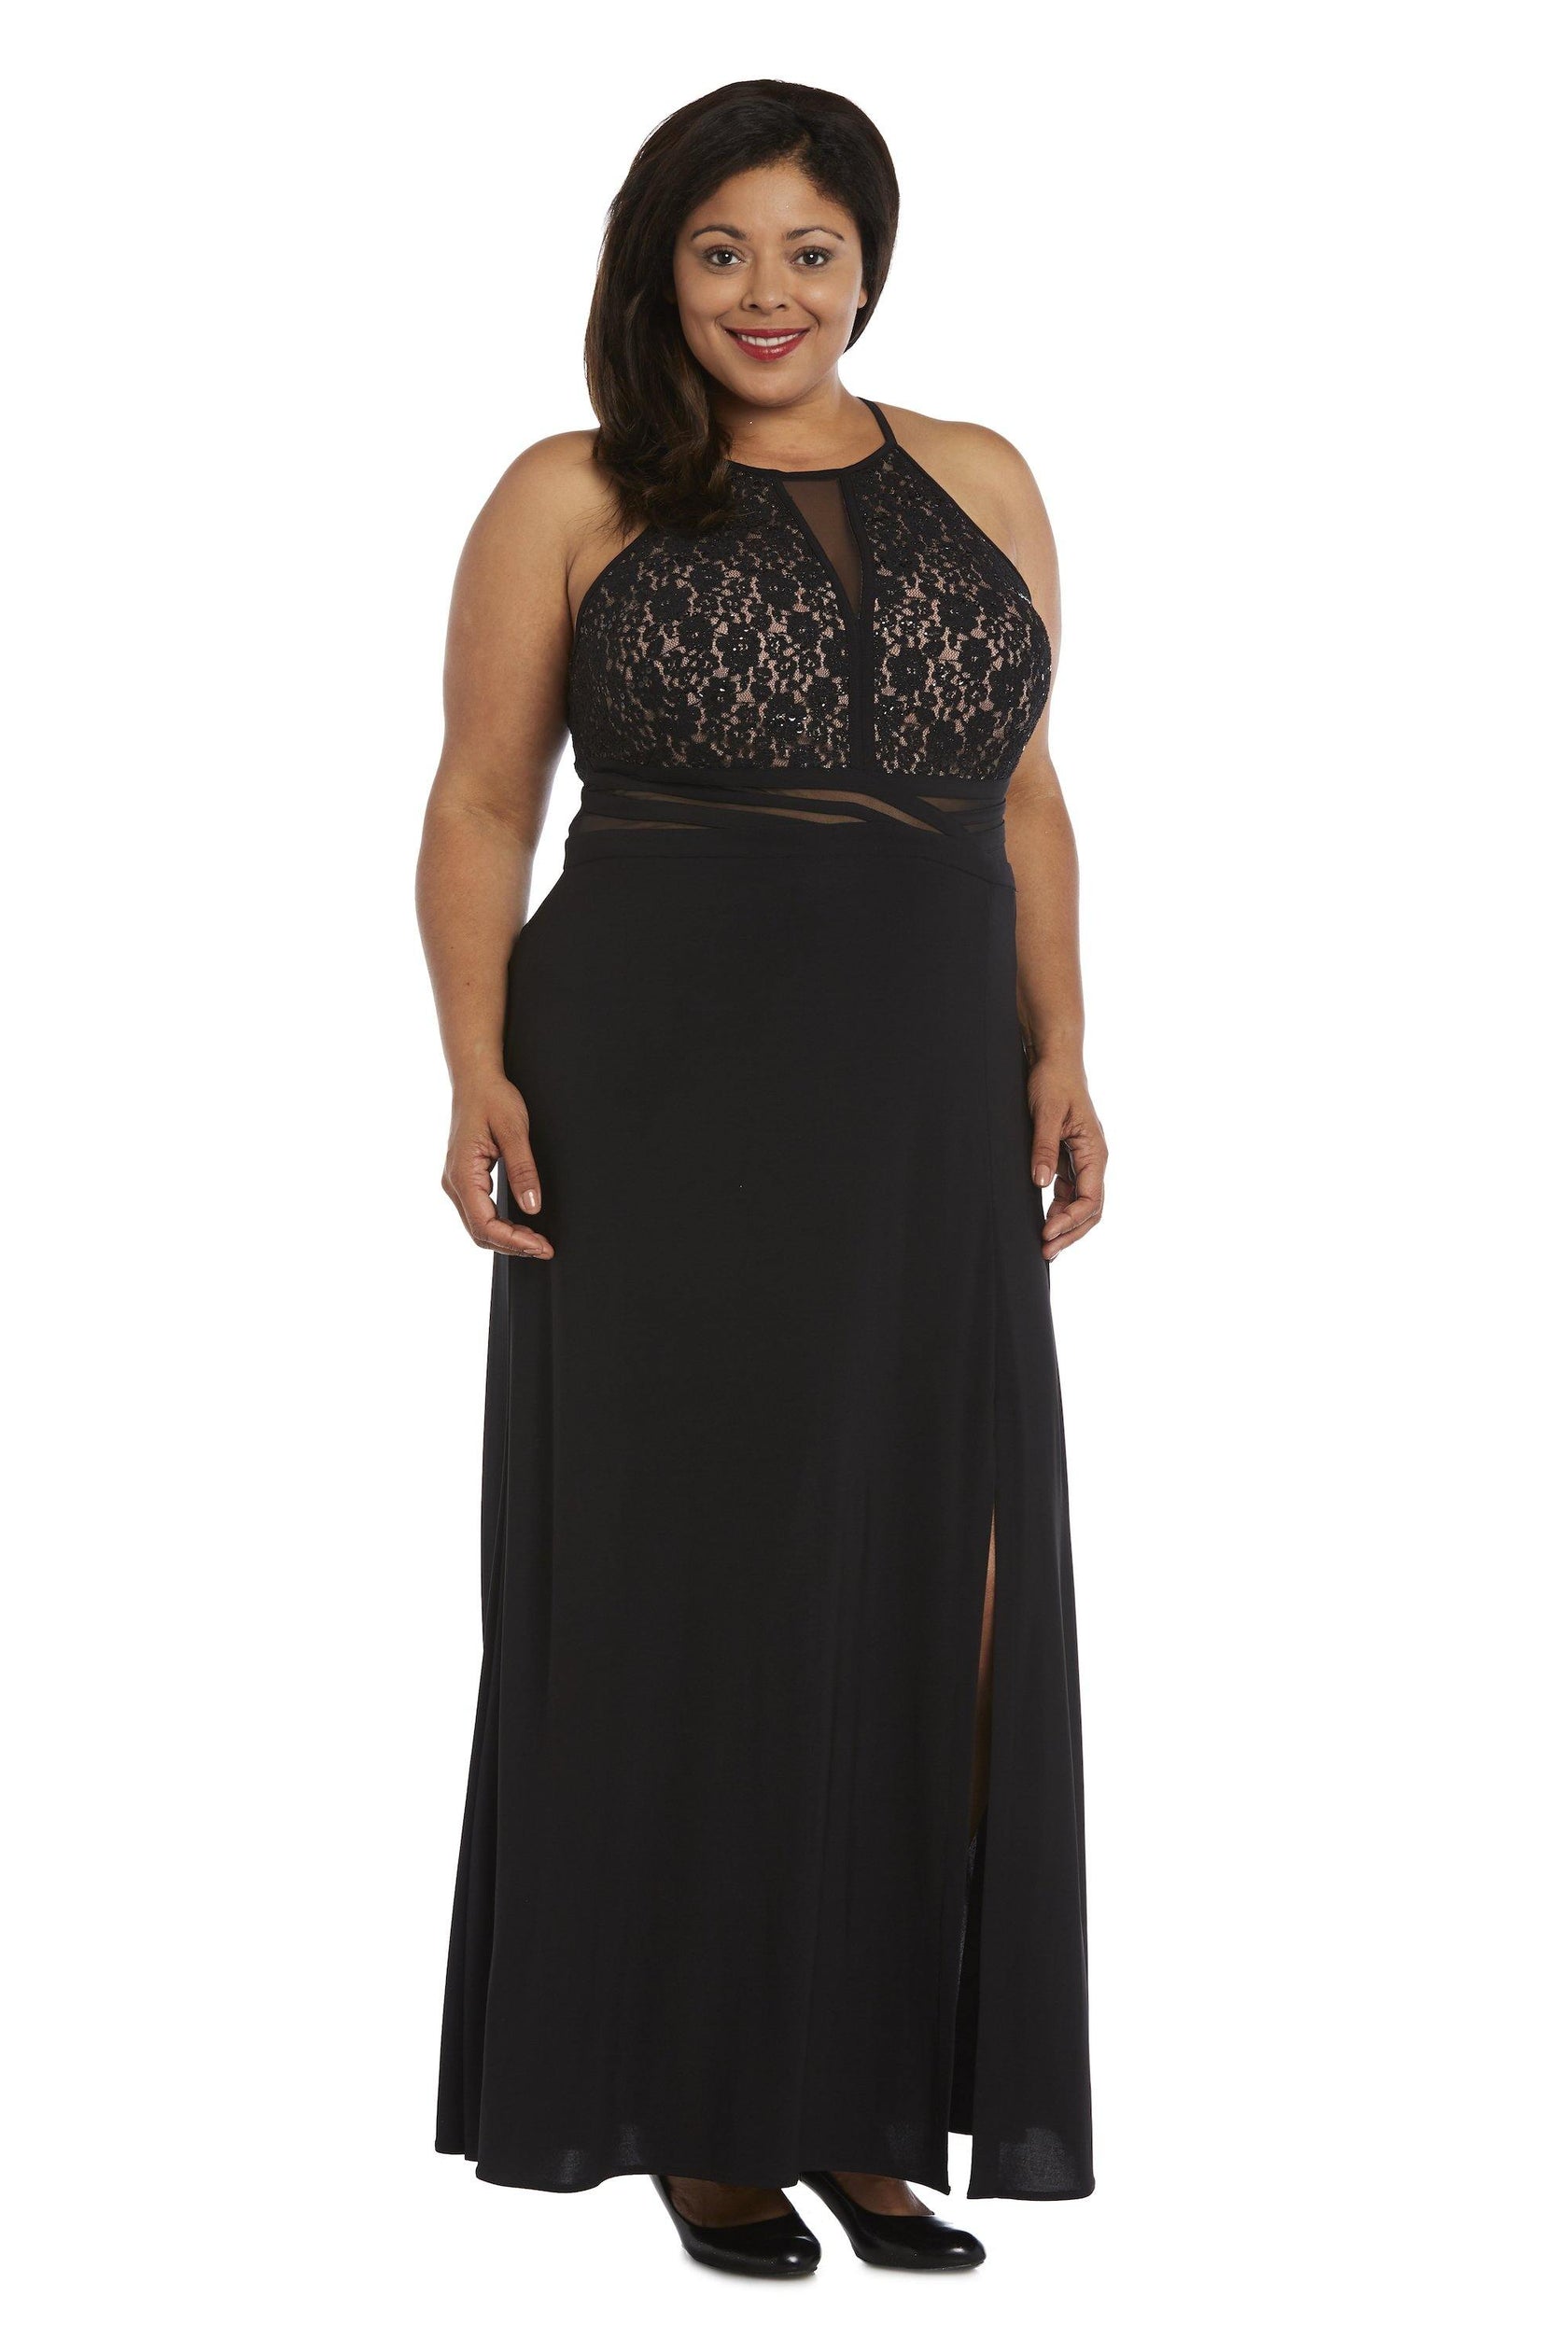 Black/Nude Morgan & Co 12524WM Long Plus Size Evening Dress for $79.99 ...